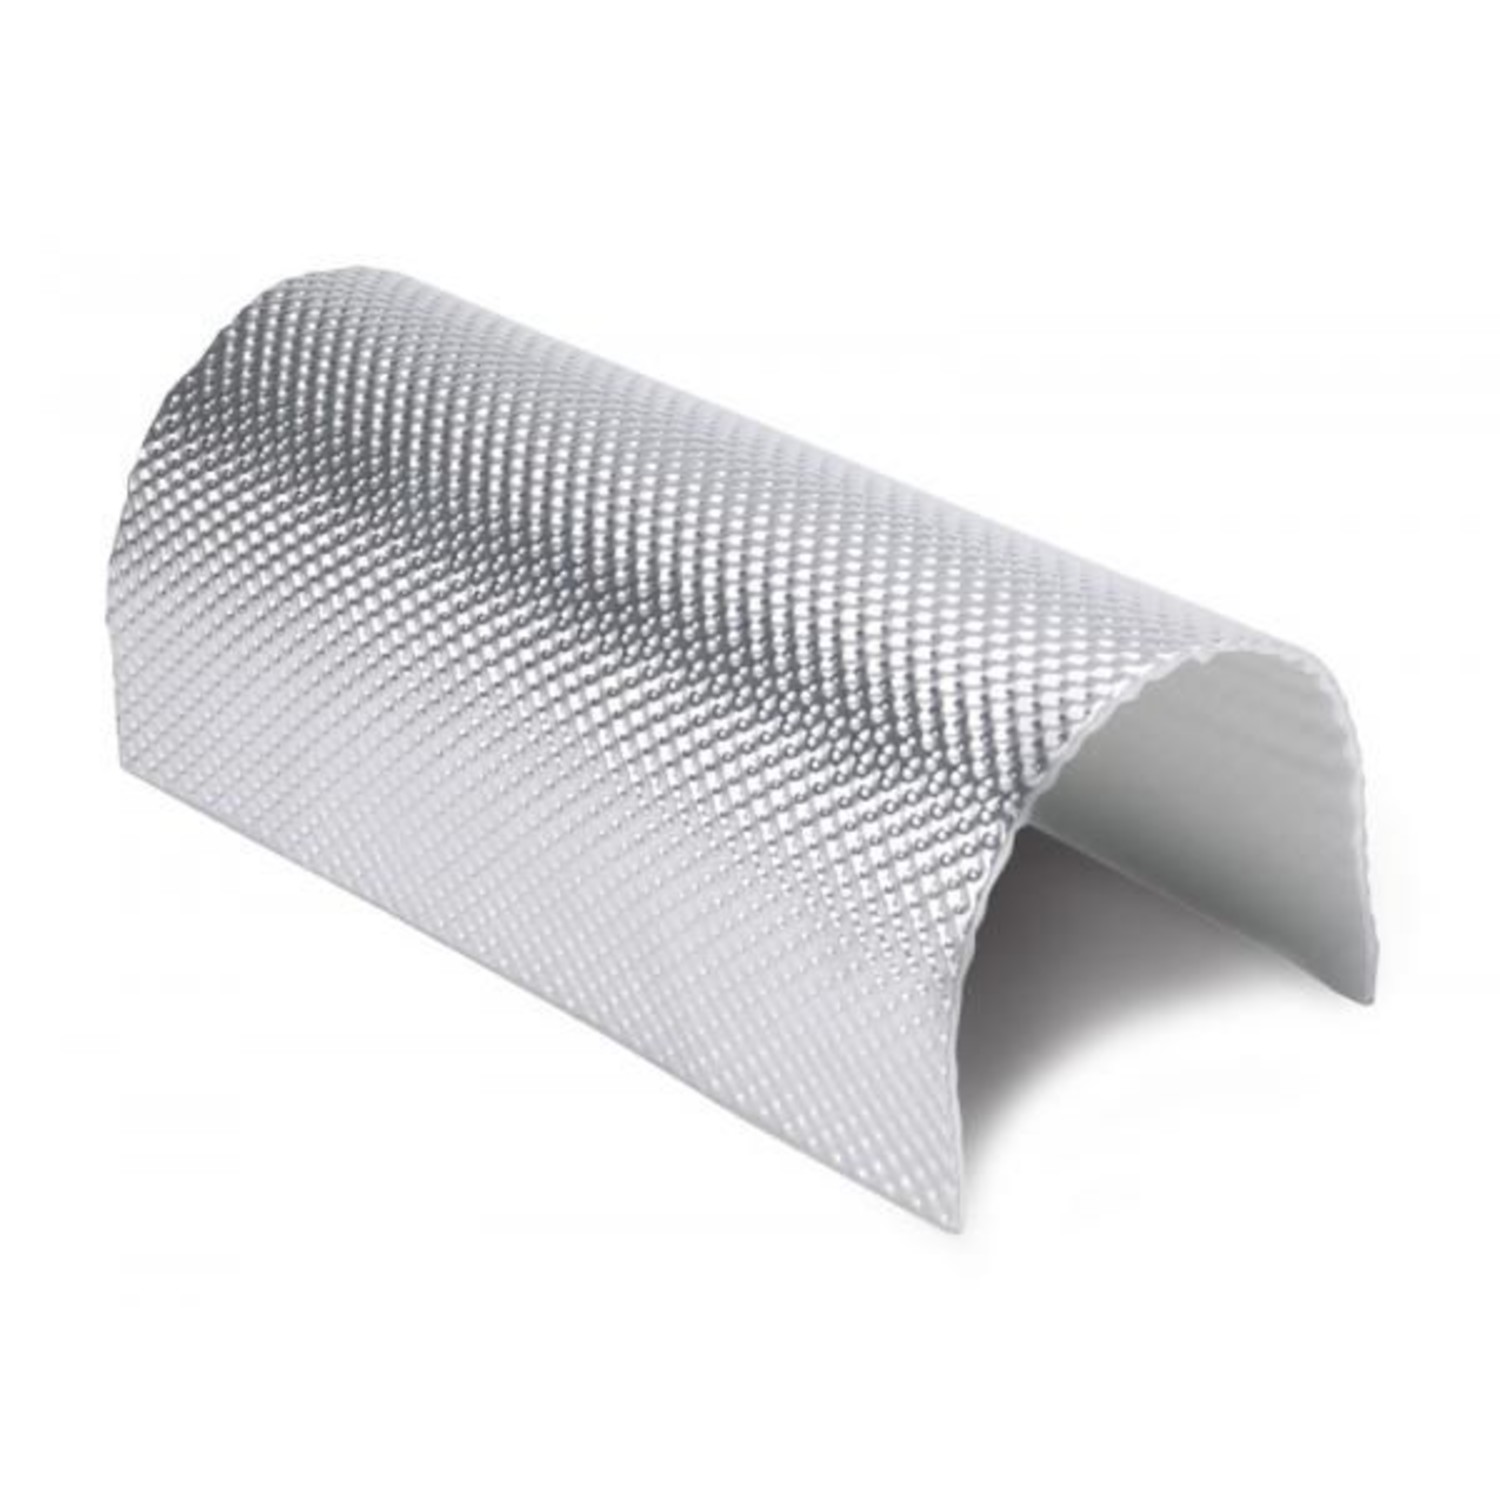 Heat resistant mat fiberglass with aluminum layer - Heat Shieldings